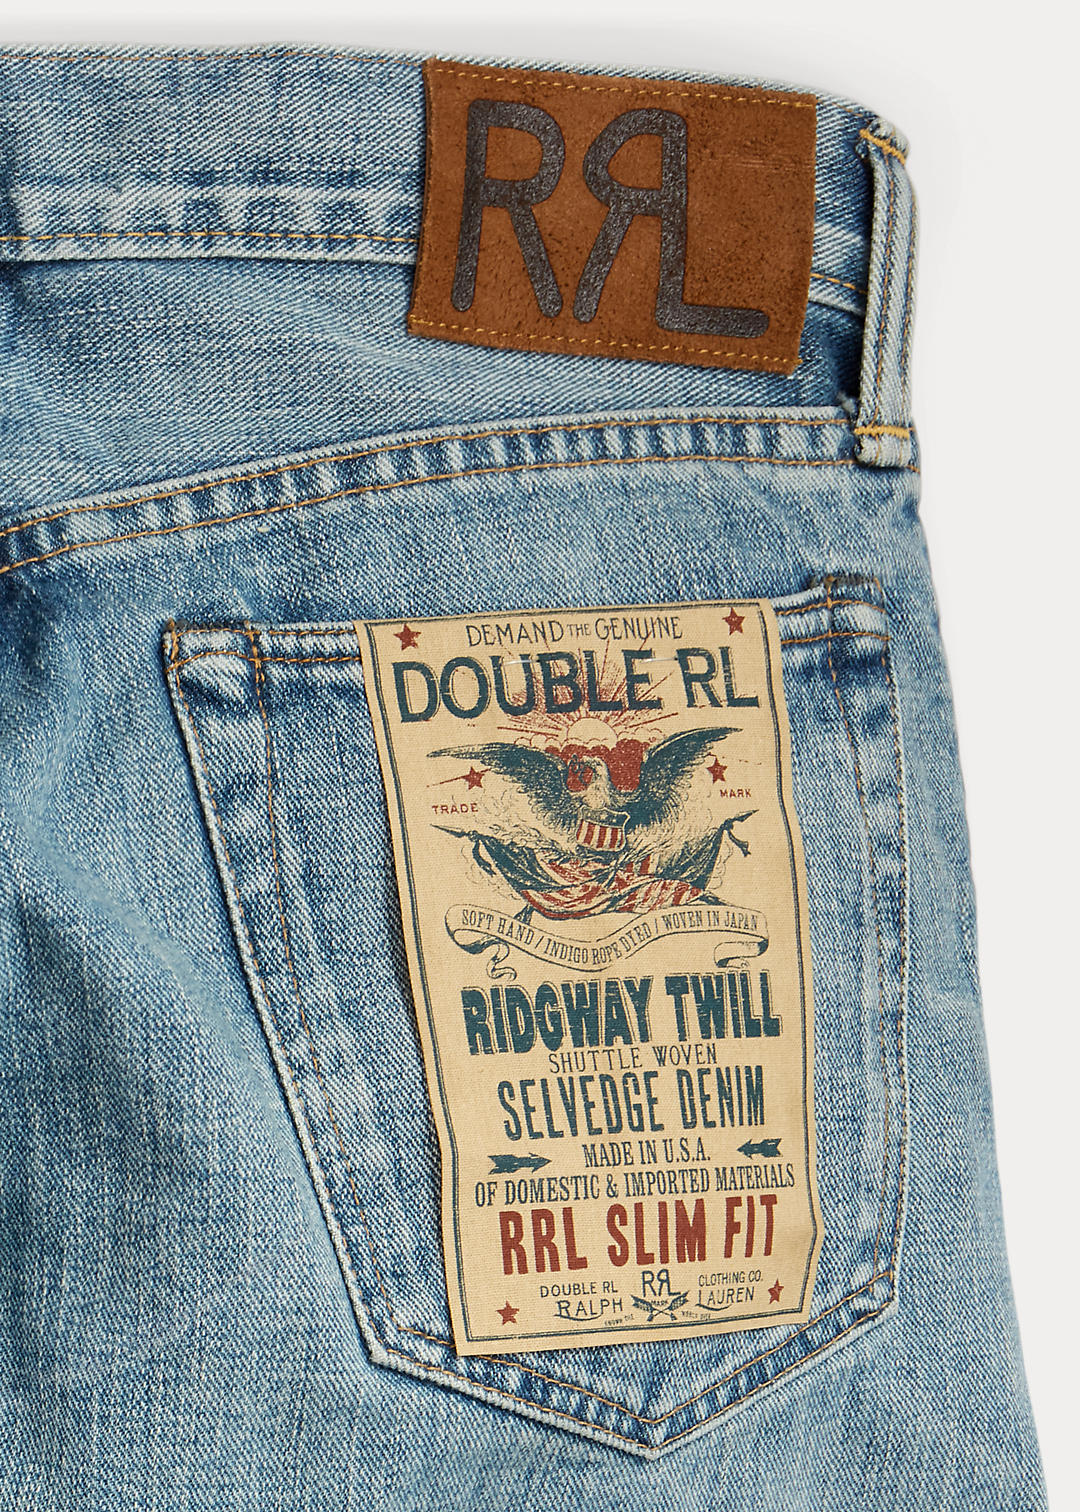 RRL Slim fit Otisfield selvedge jeans 7